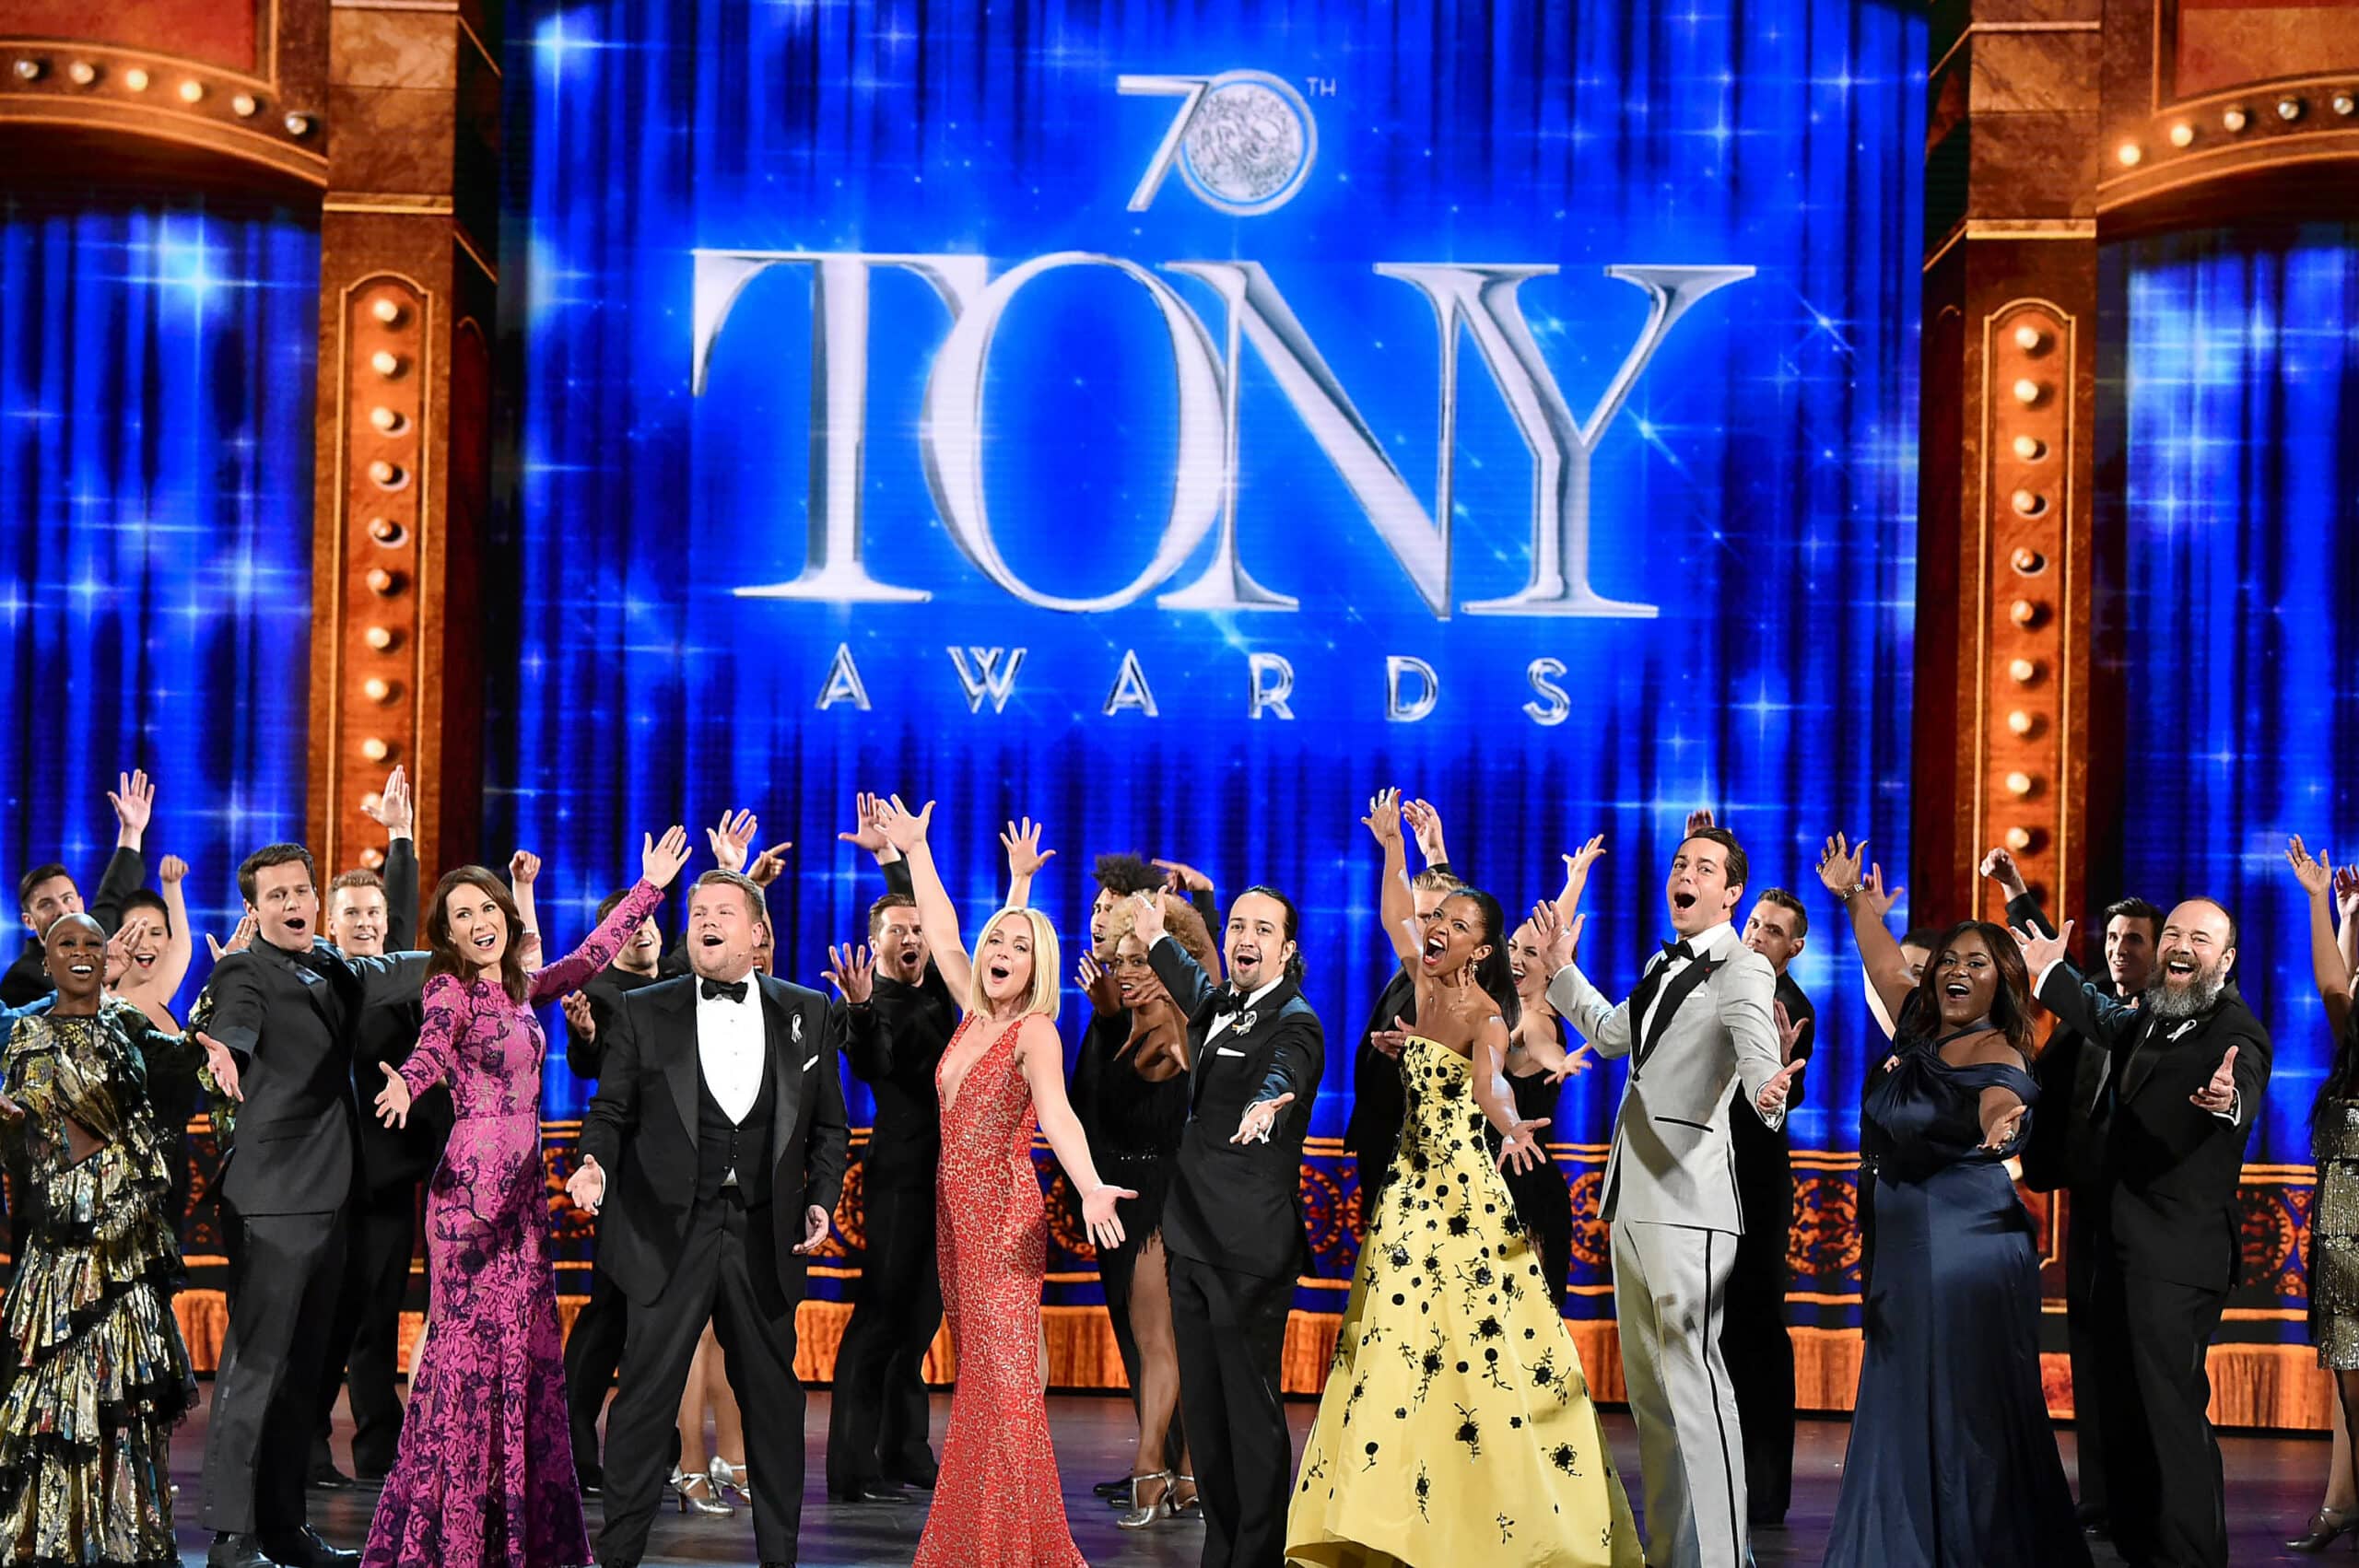 Tony Awards, Broadway's Back to Air September 26